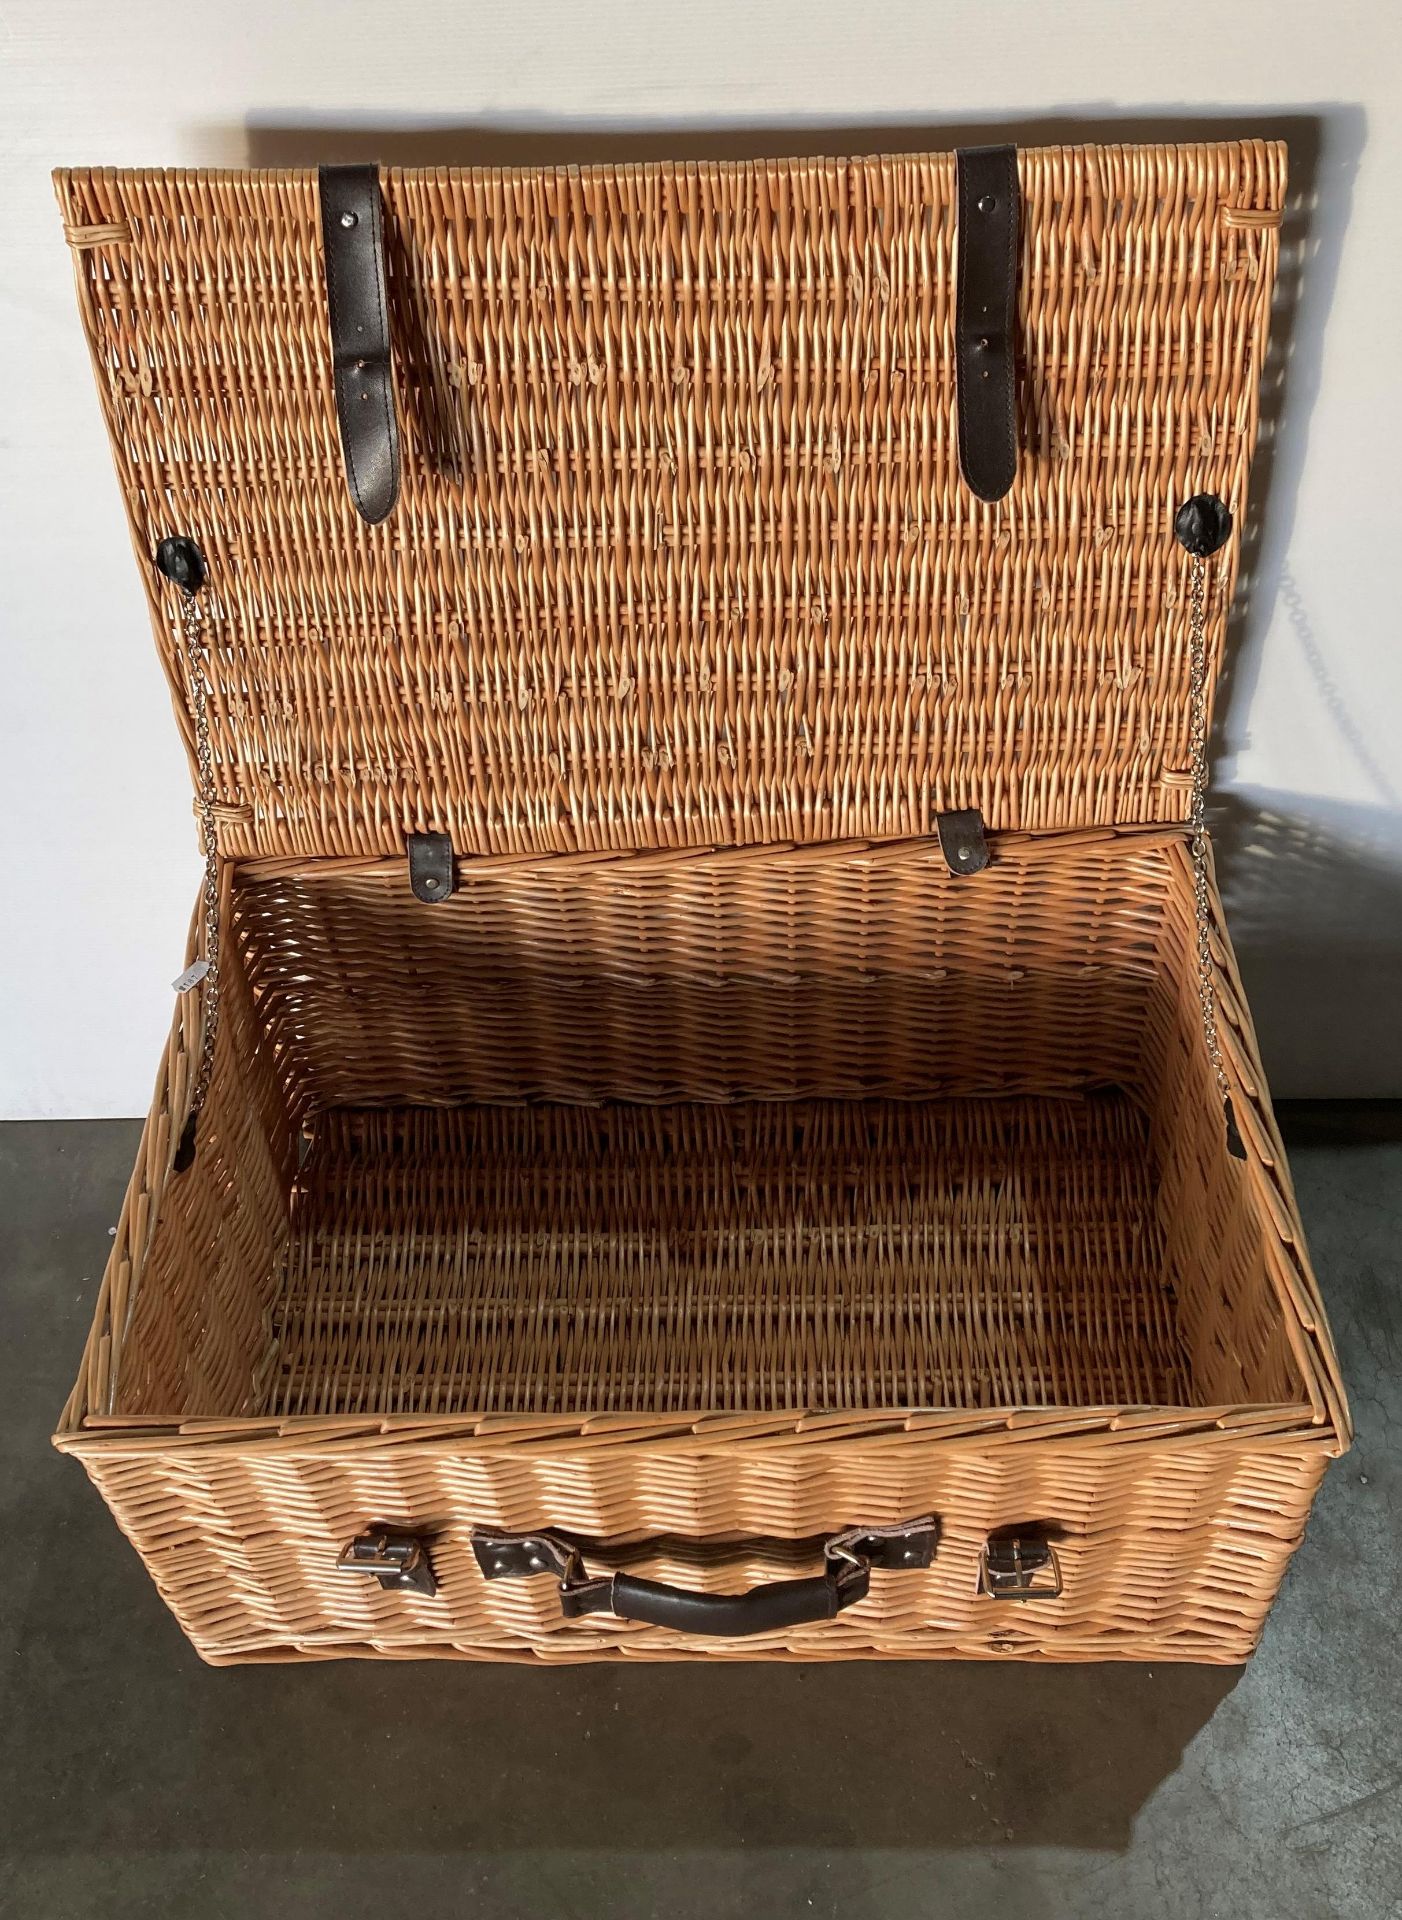 Wicker picnic basket, - Image 2 of 2